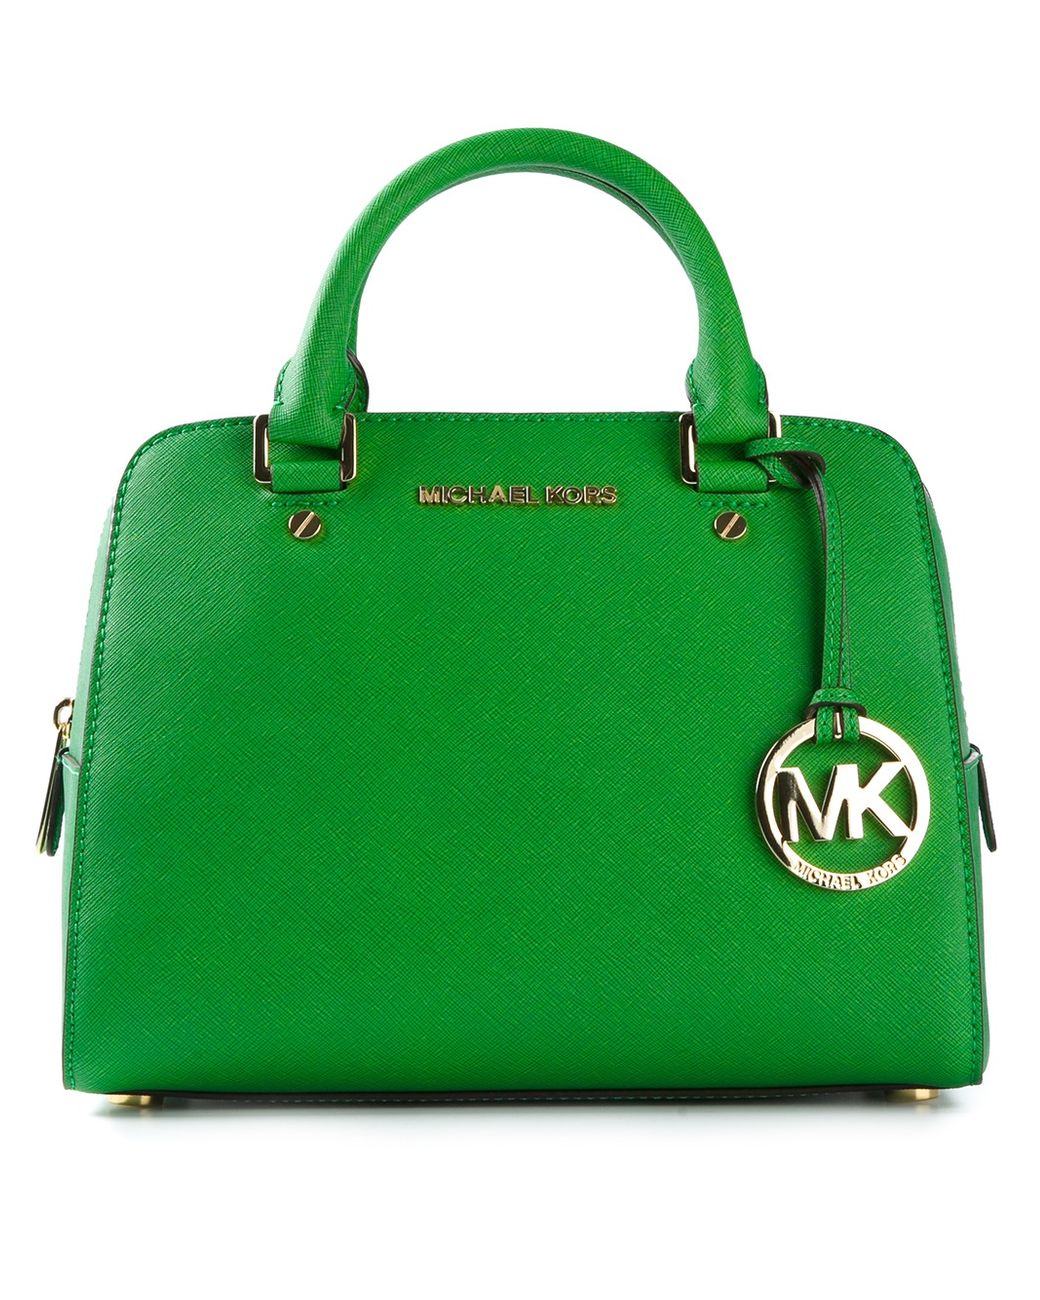 Michael Kors Duffle Travel Satchel Bag Handbag Crossbody Shoulder Green  Purse | eBay